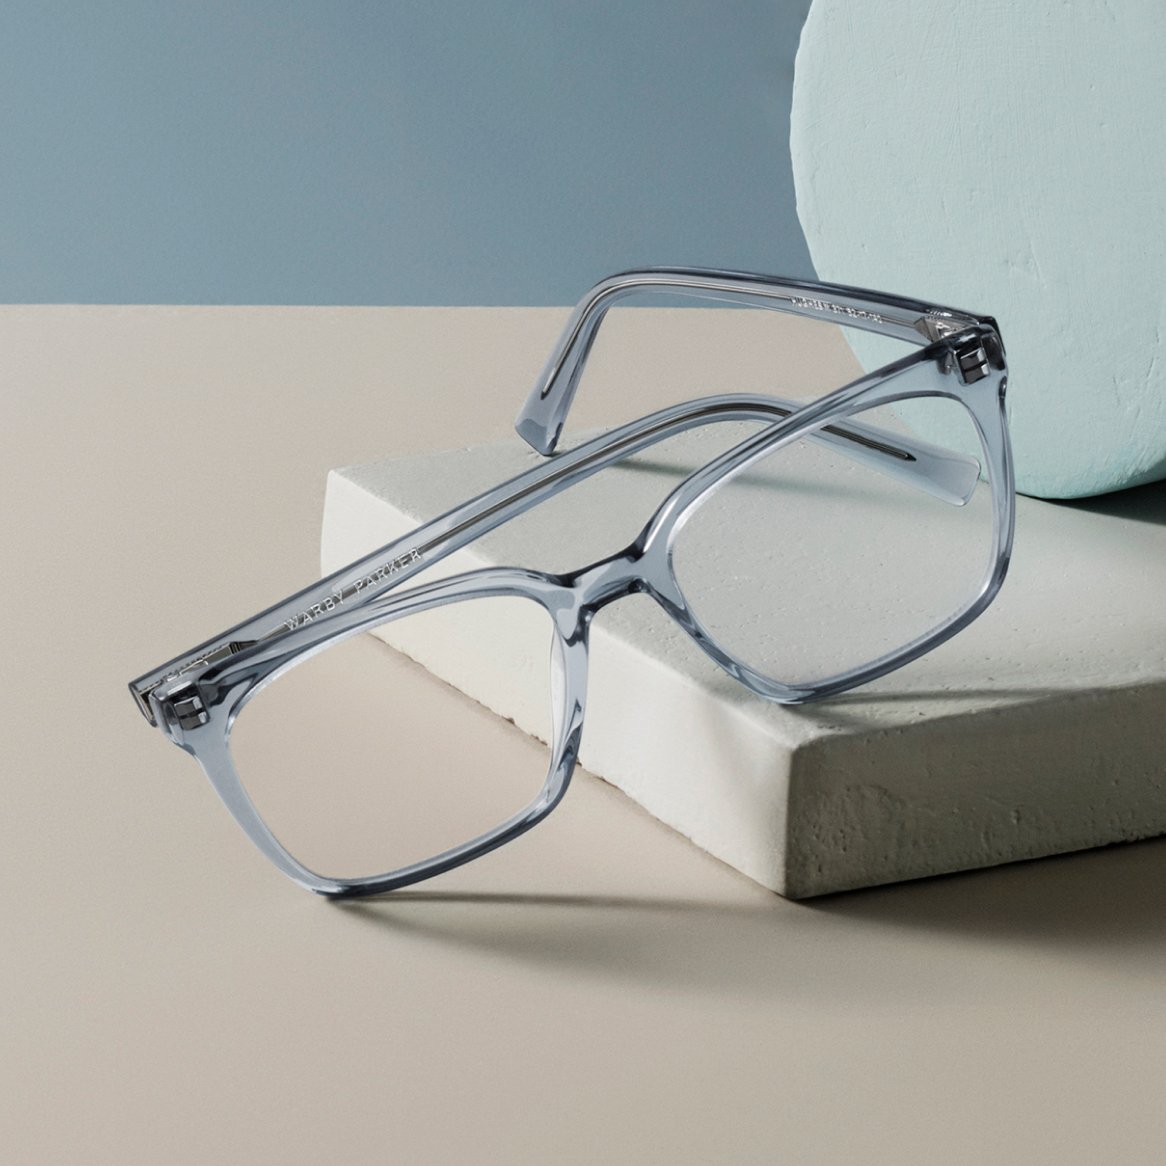 A pair of eyeglasses on a grey block